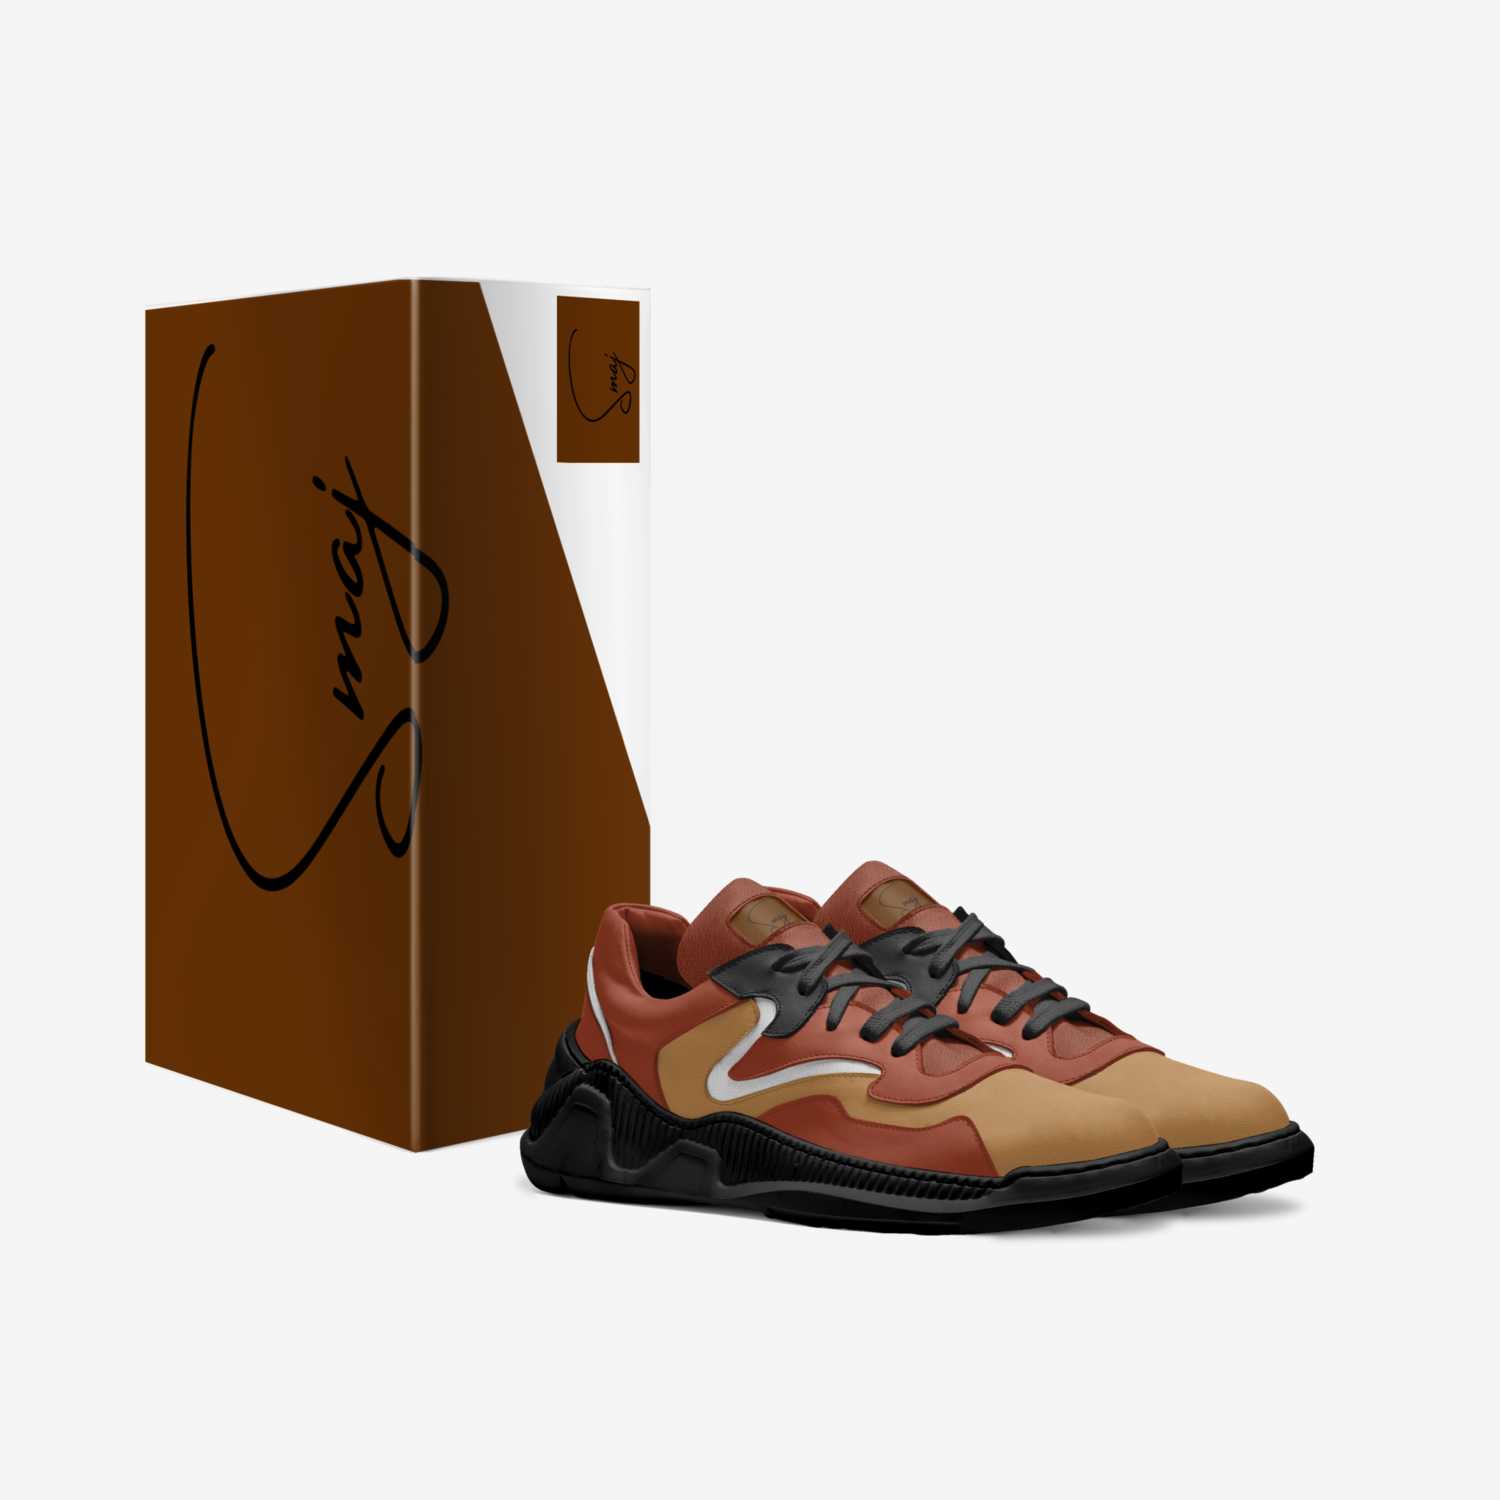 Smaj' custom made in Italy shoes by Akira Carson | Box view